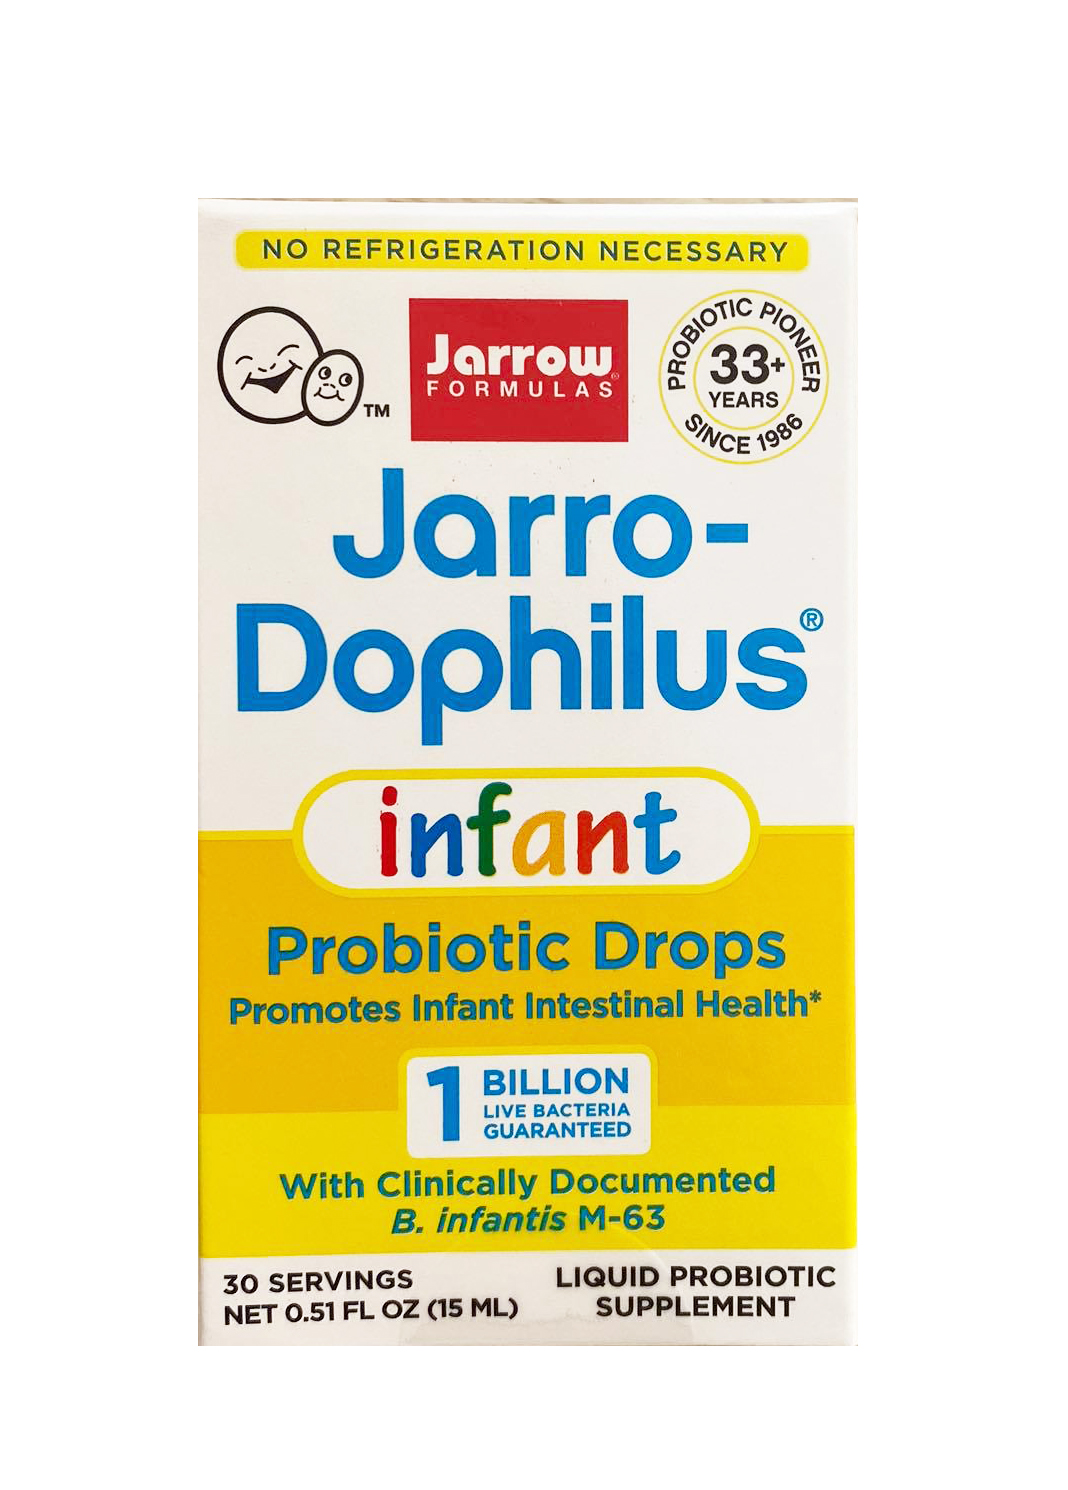 Men vi sinh Jarro Dophilus Infant cho bé từ 0 đến 6 tháng tuổi (mẫu mới)